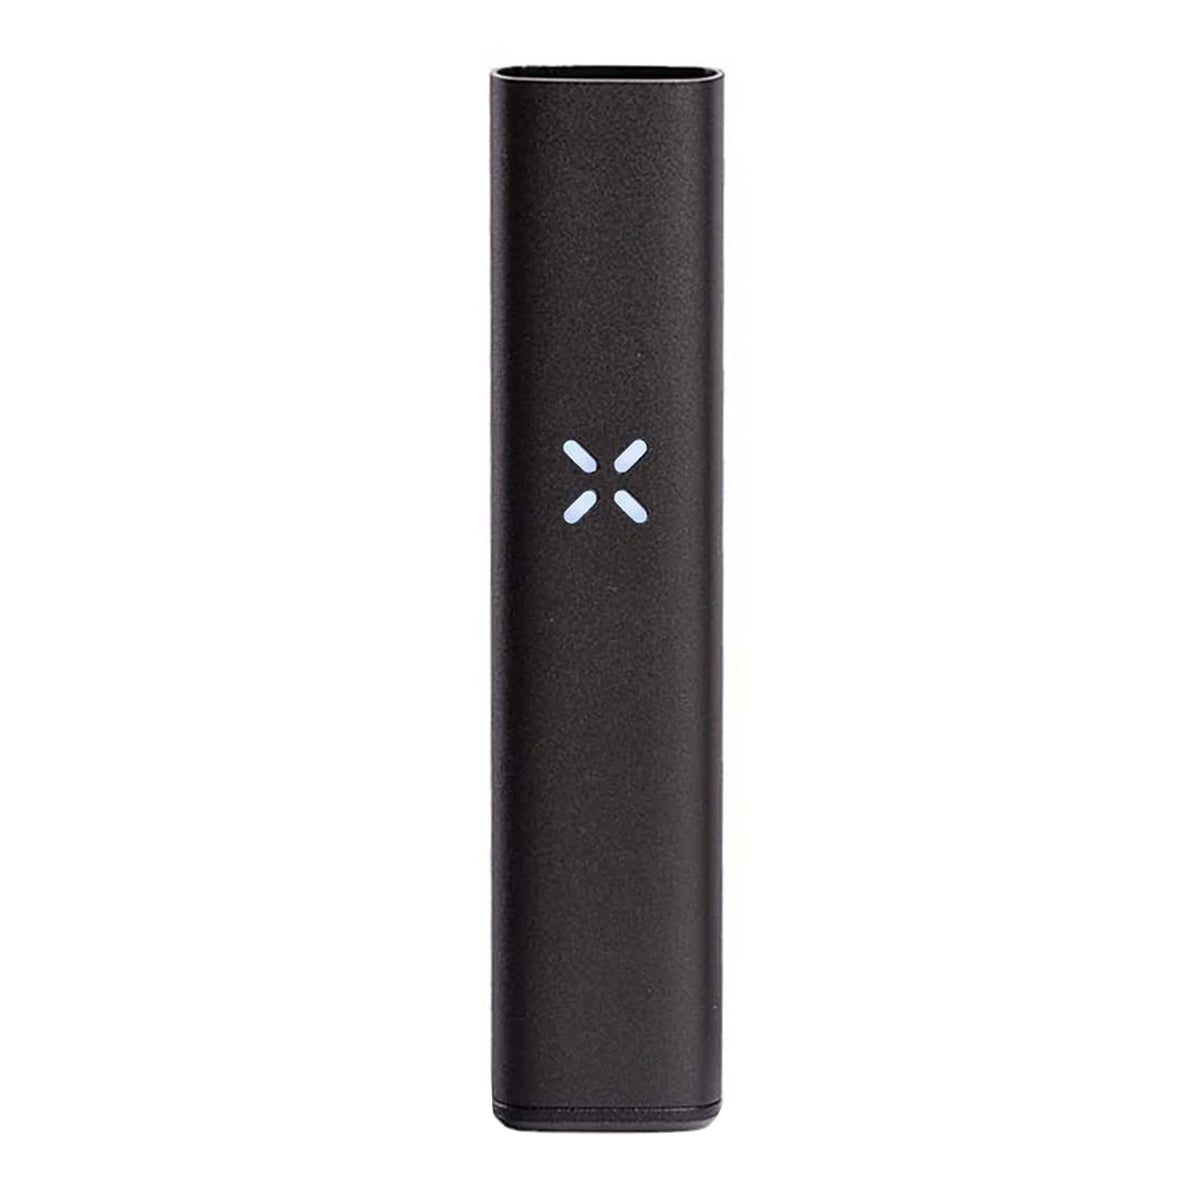 PAX Era Pro Device - Smoker's Emporium